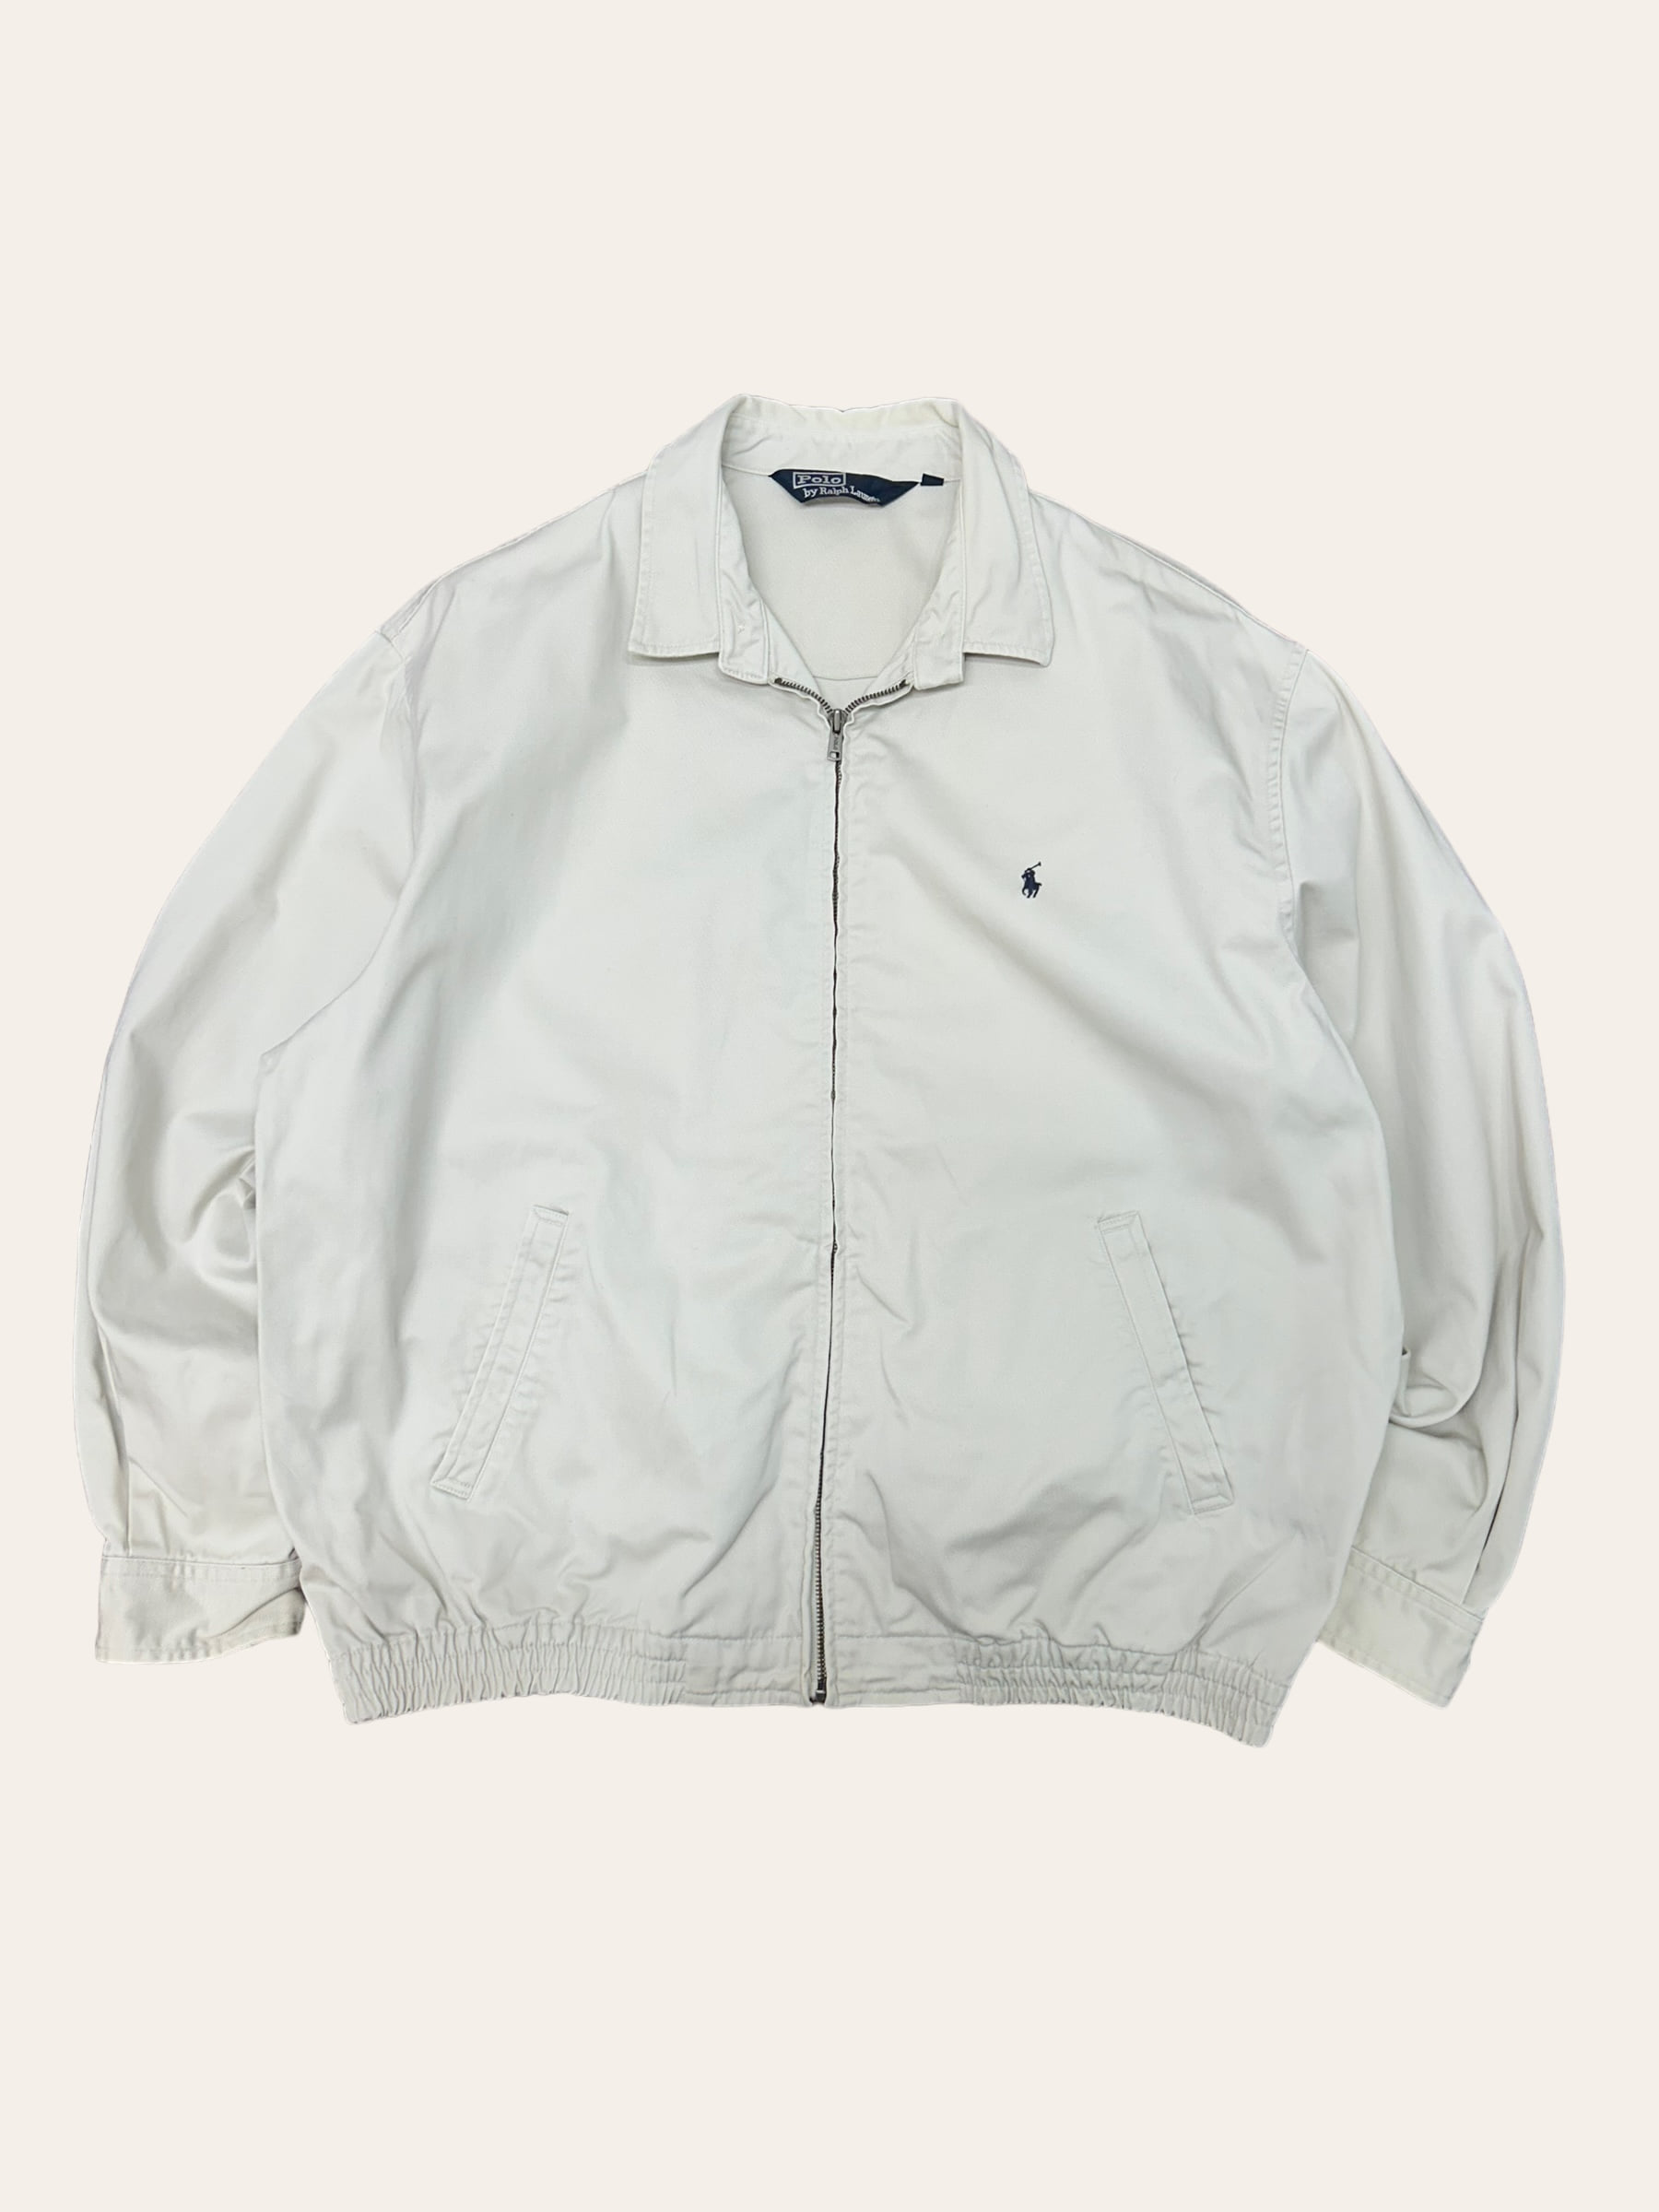 Polo ralph lauren light beige cotton blouson jacket 105